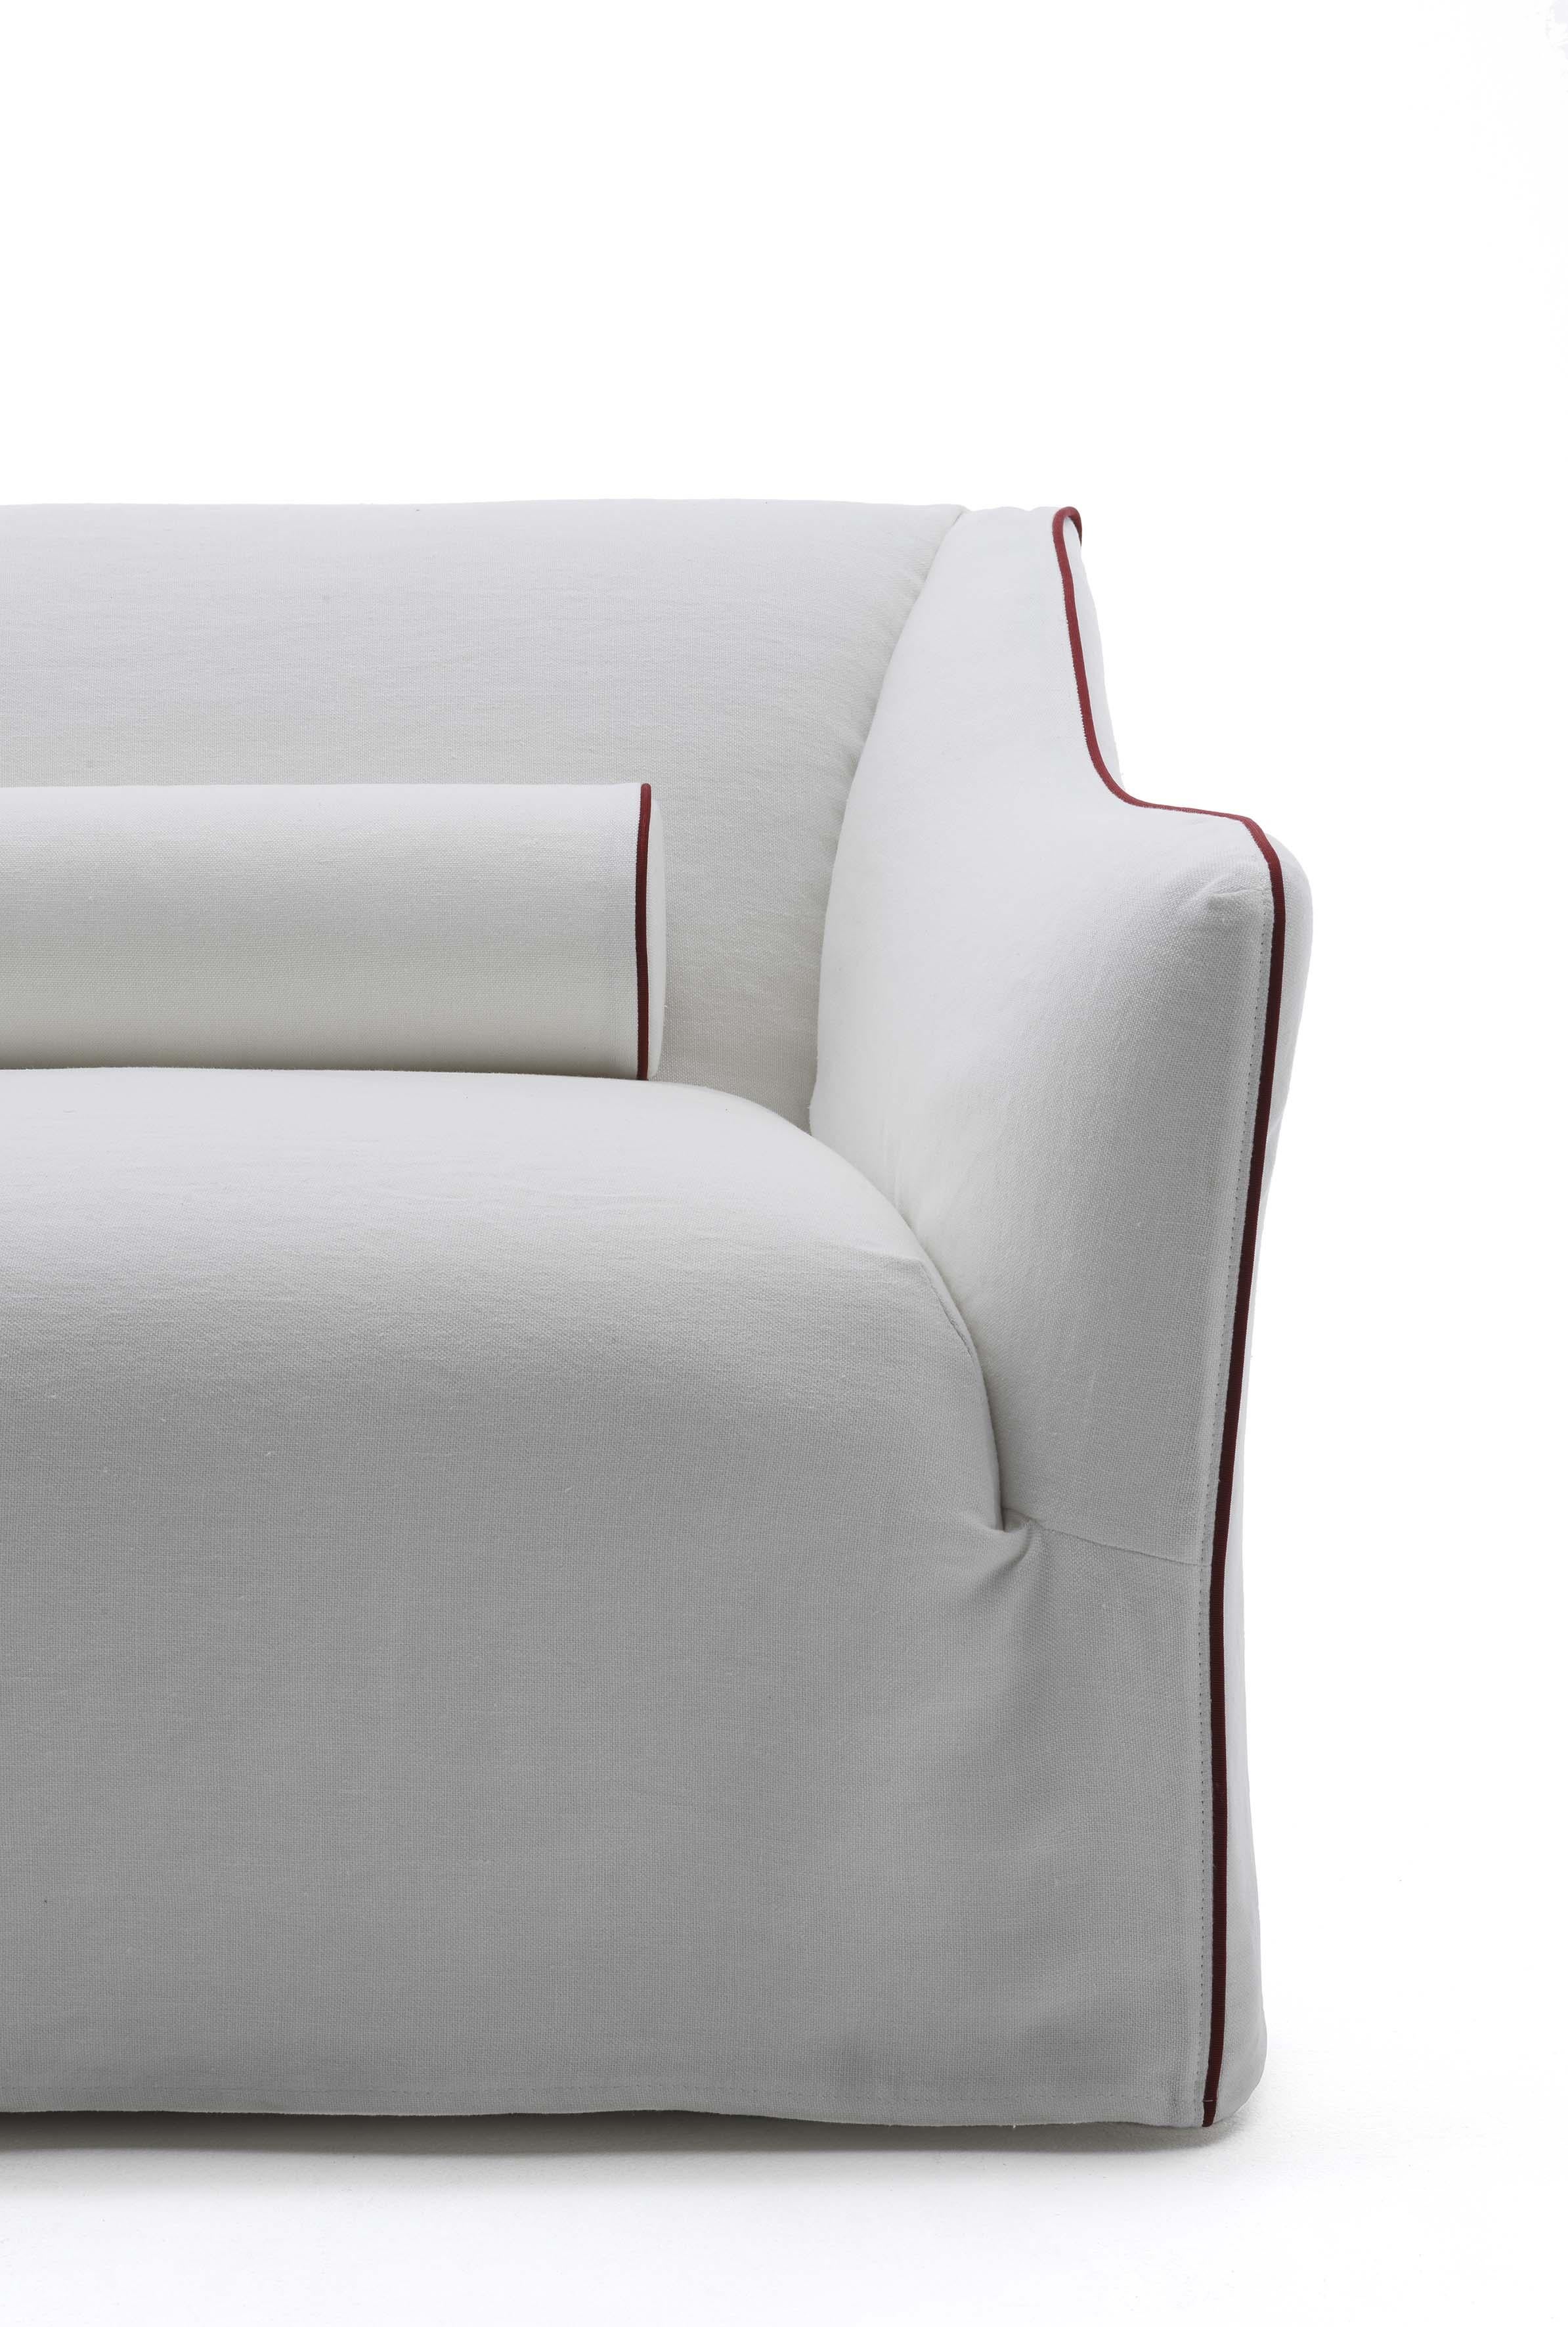 Gervasoni Sofa Upholstered Saia 10 by David Lopez Quincoces For Sale 1